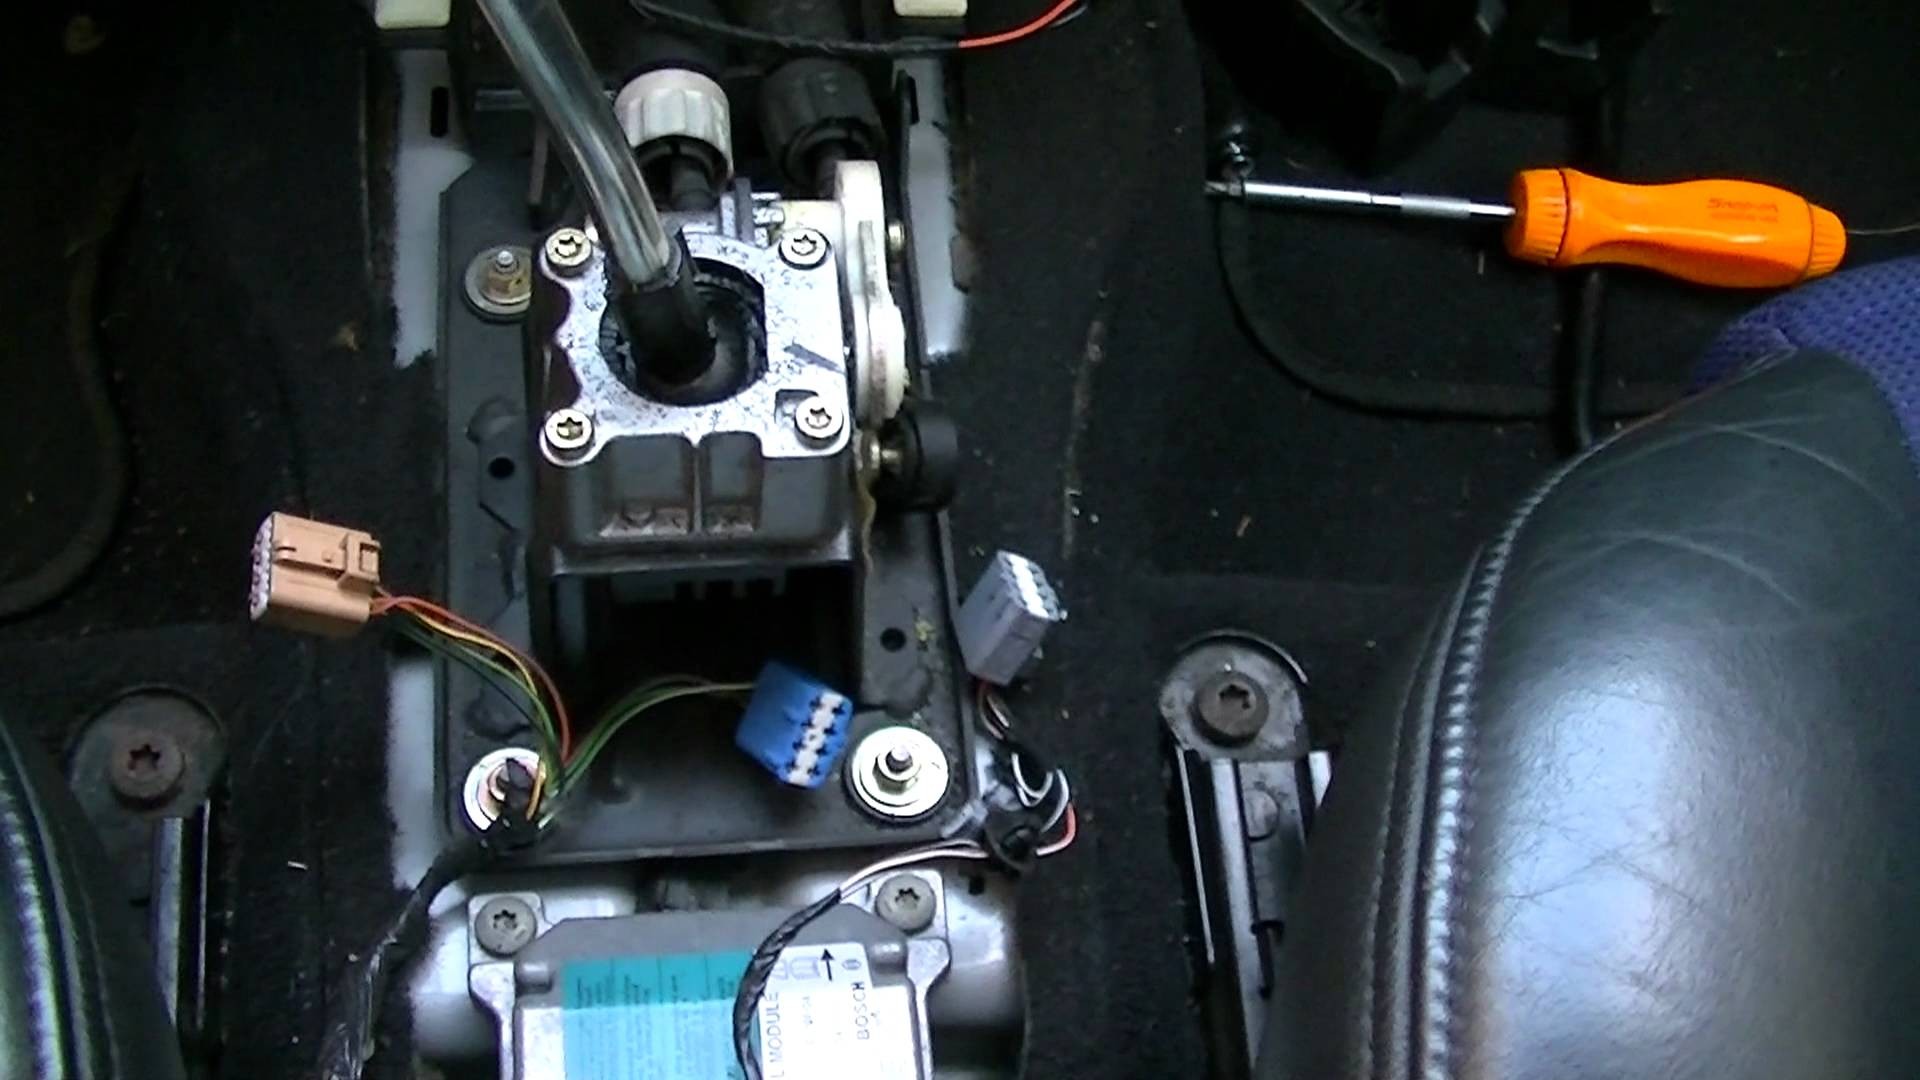 2011 ford Fiesta Engine Diagram Focus Shifter Cables Part 1 Of 2011 ford Fiesta Engine Diagram